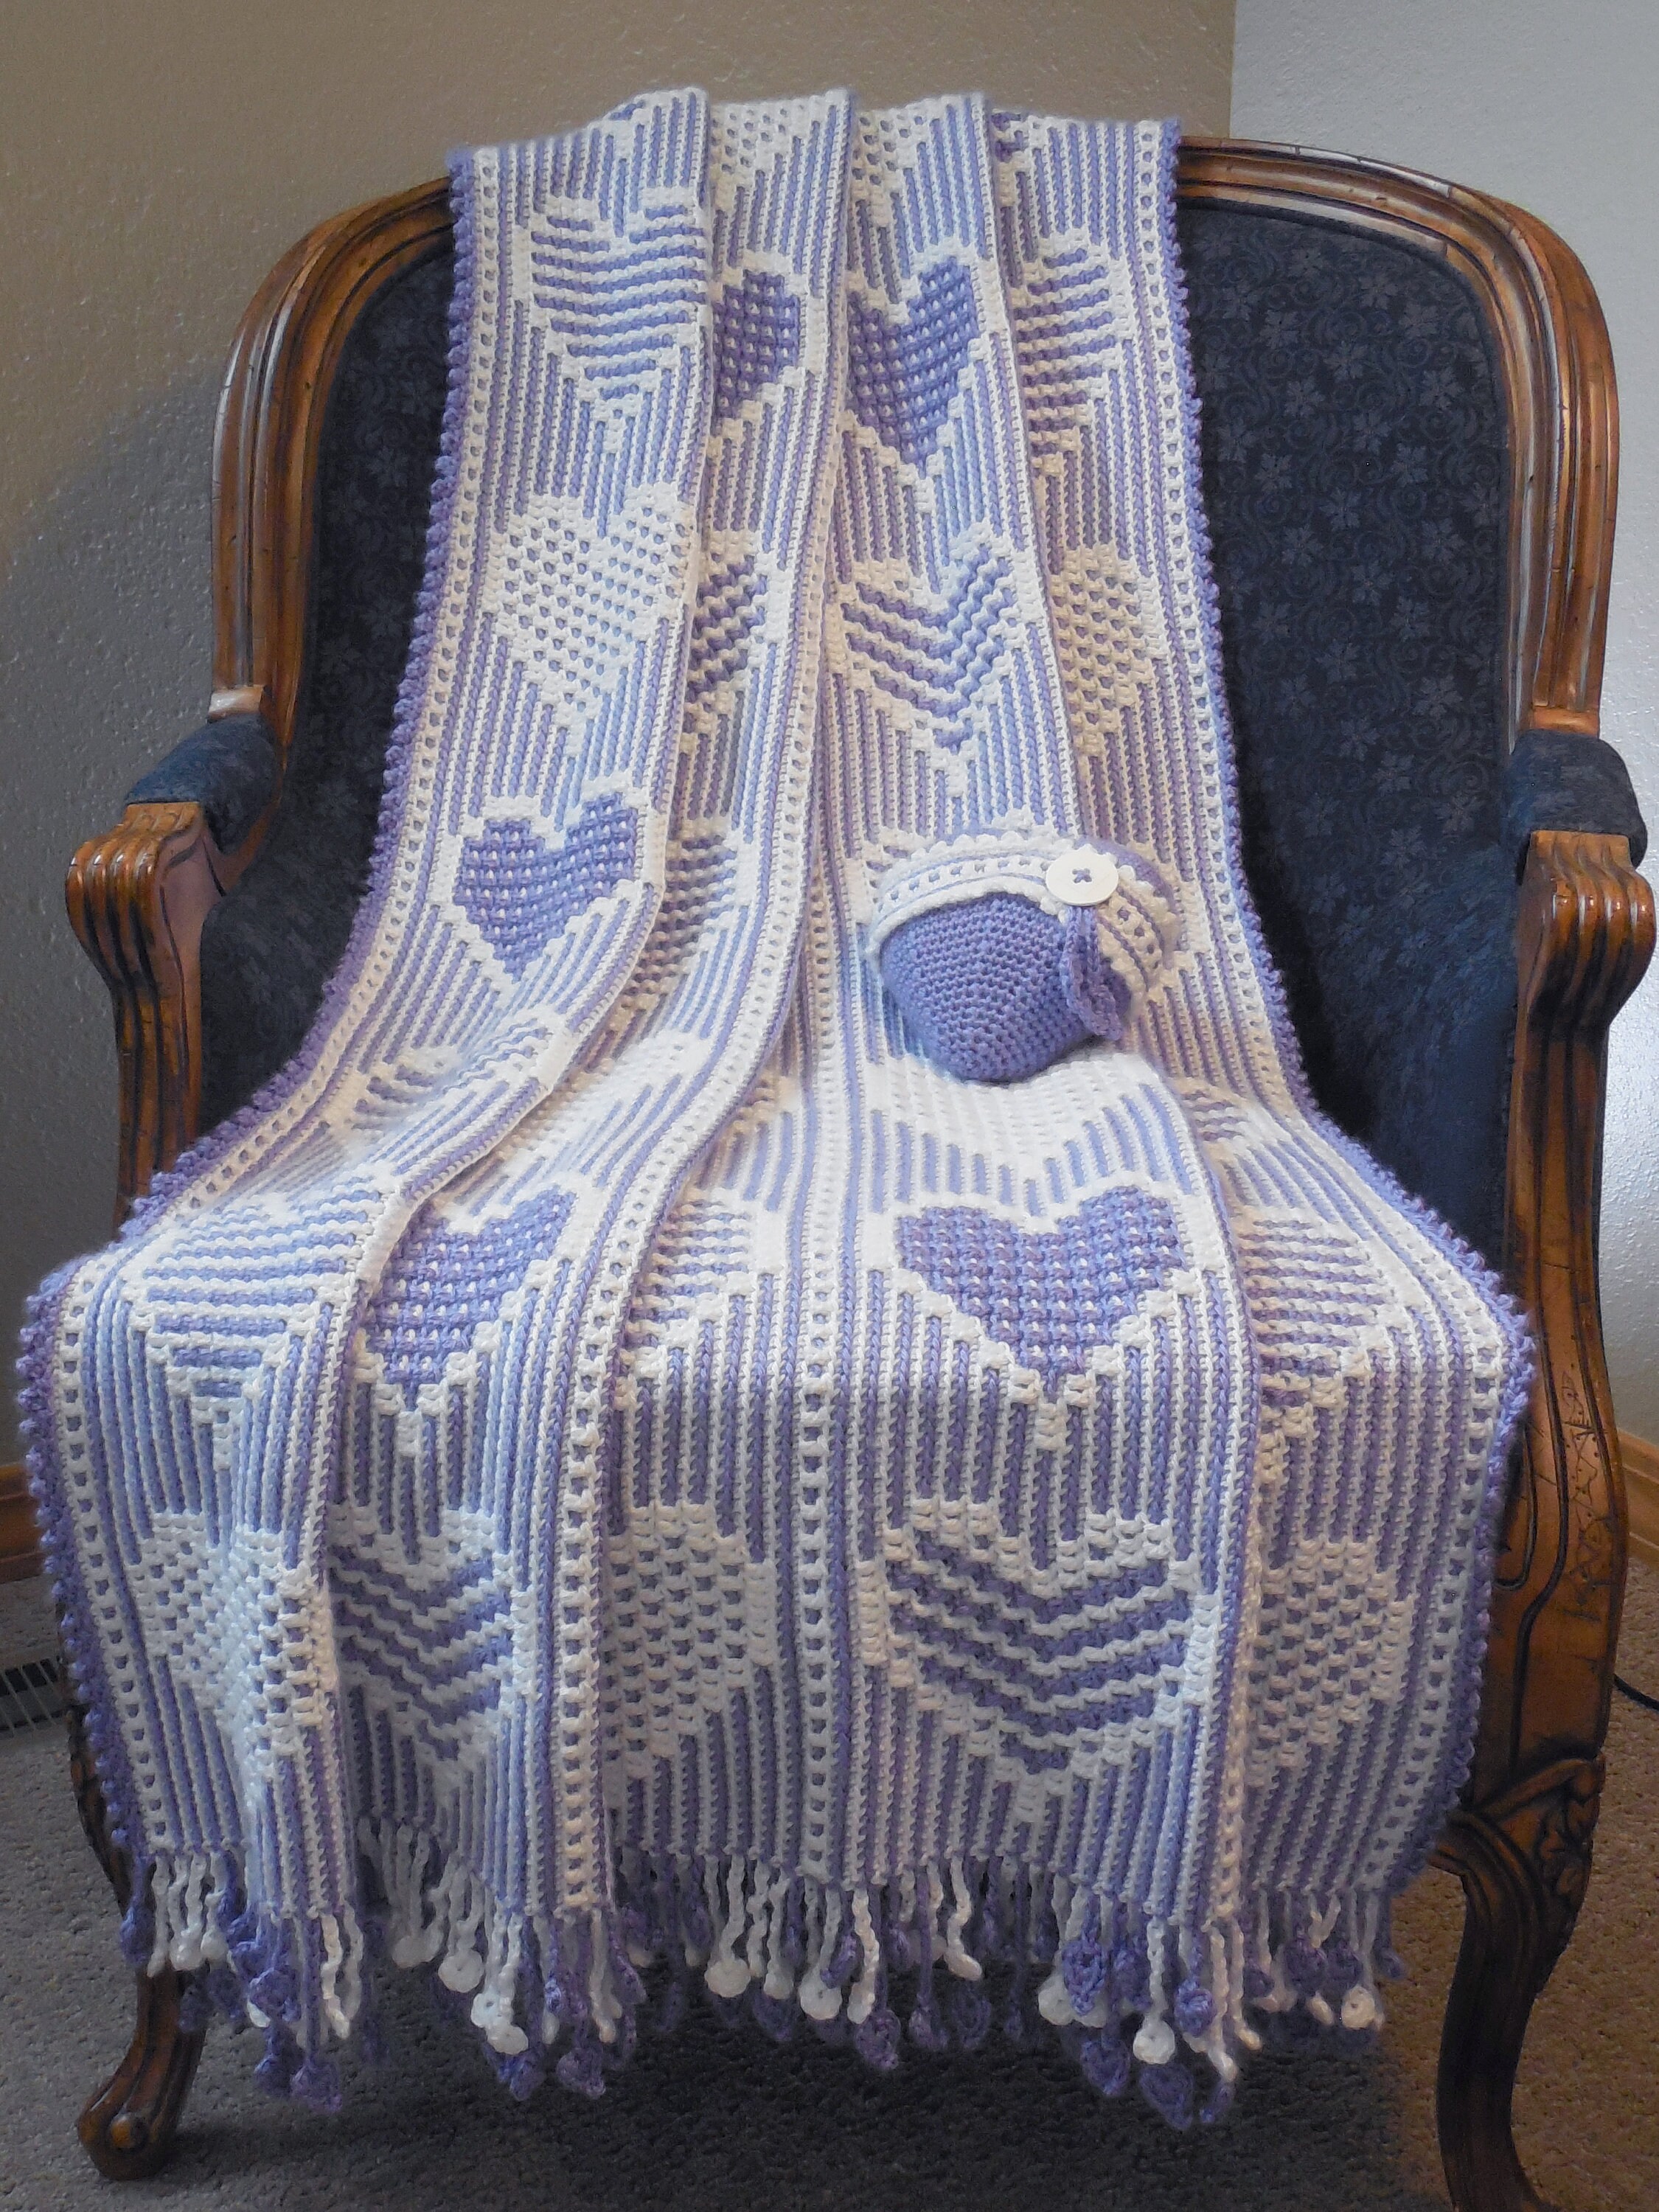 Flora Collection: set of 12 mosaic crochet patterns